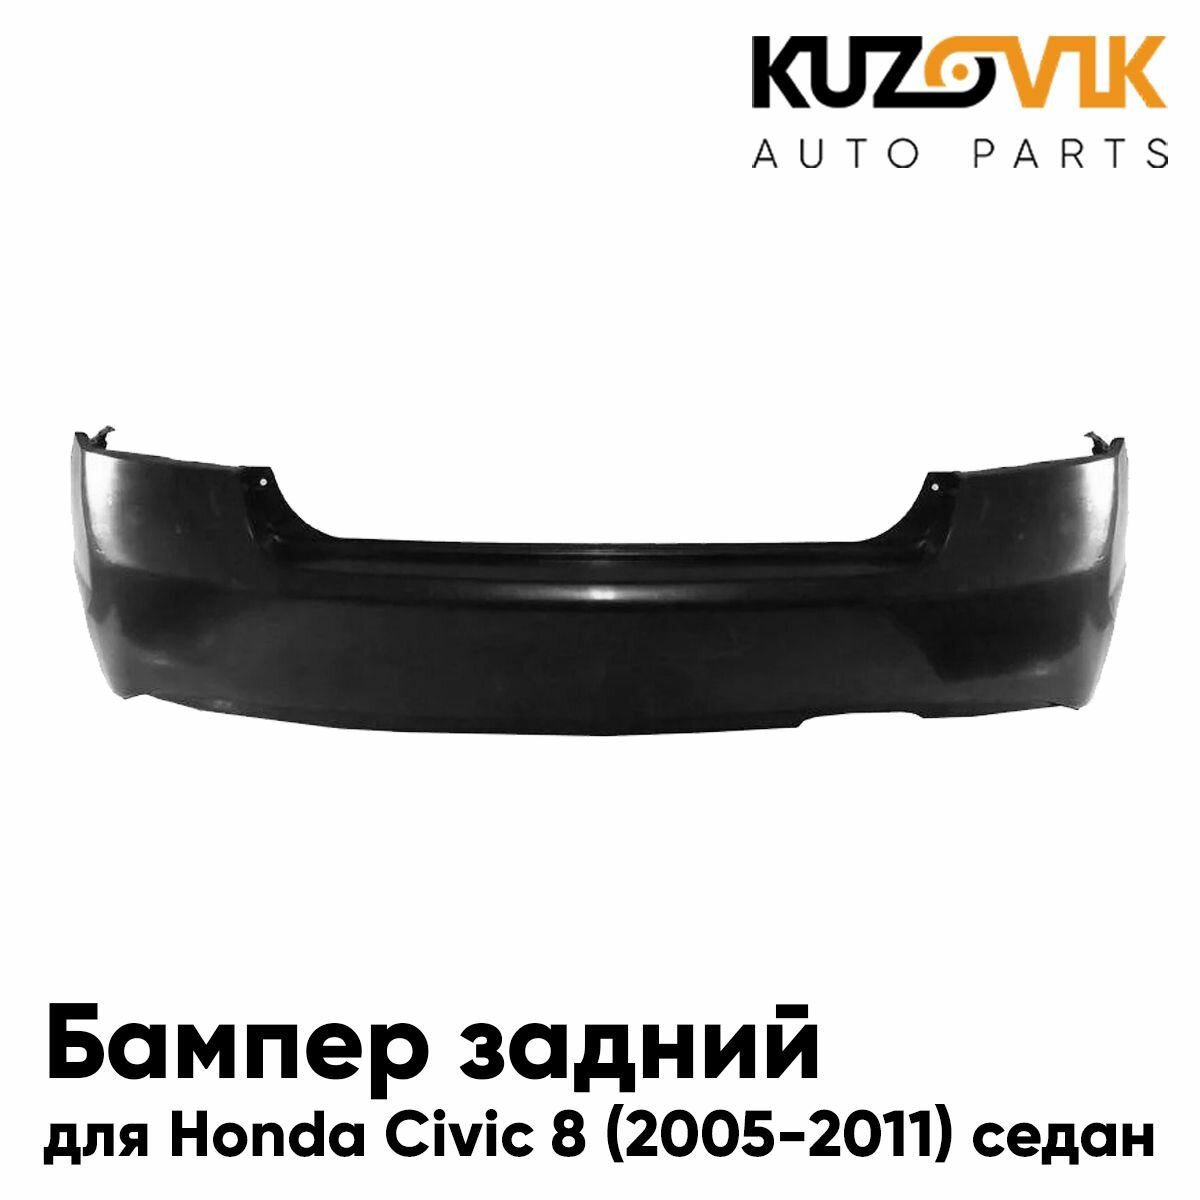 Бампер задний для Хонда Цивик Honda Civic 8 (2005-2011) седан